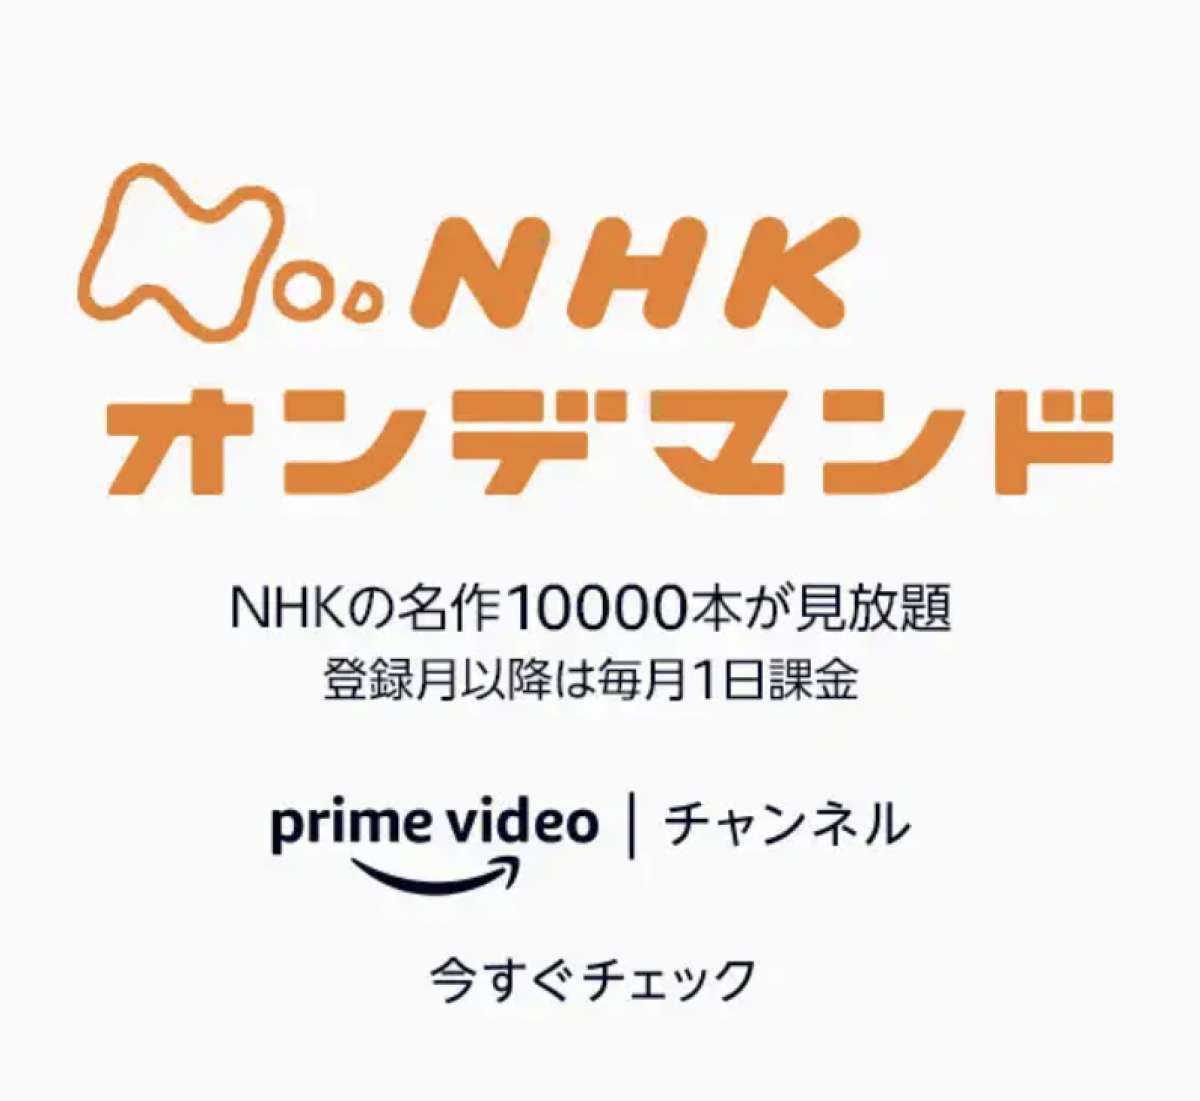 Amazon Prime Videoチャンネル NHKオンデマンド